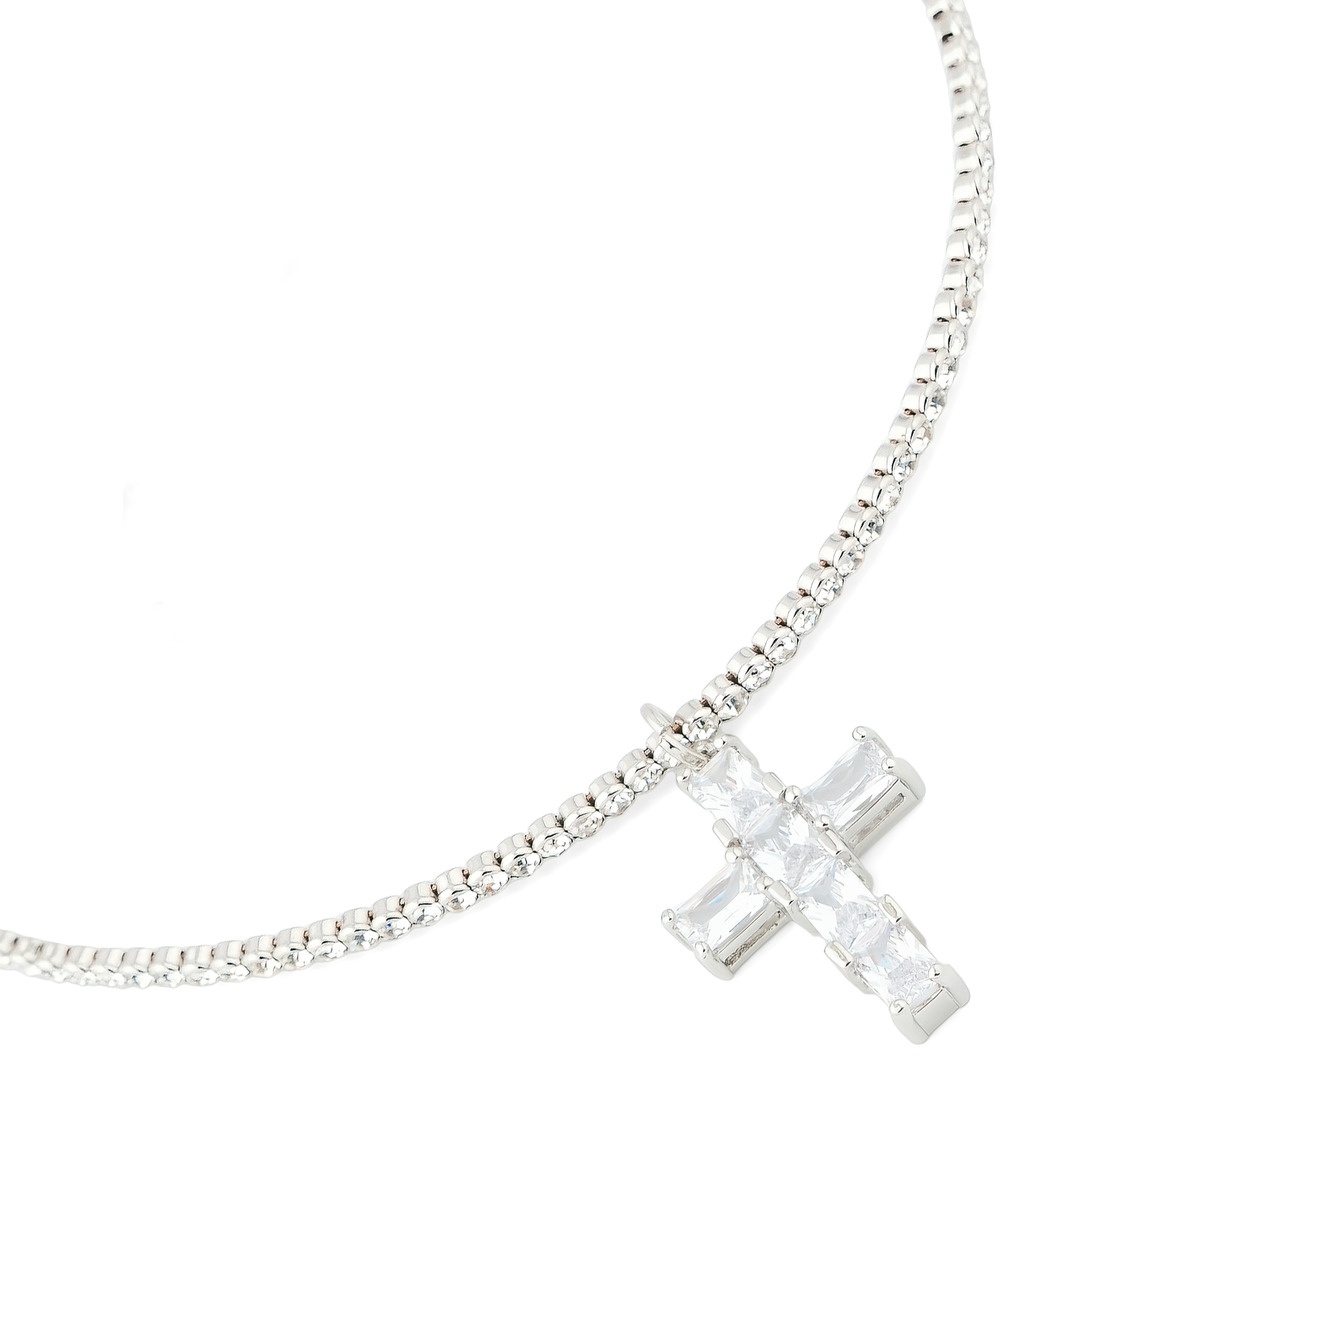 Herald Percy Чокер с белыми кристаллами и крестом herald percy чокер с белыми кристаллами и крестом